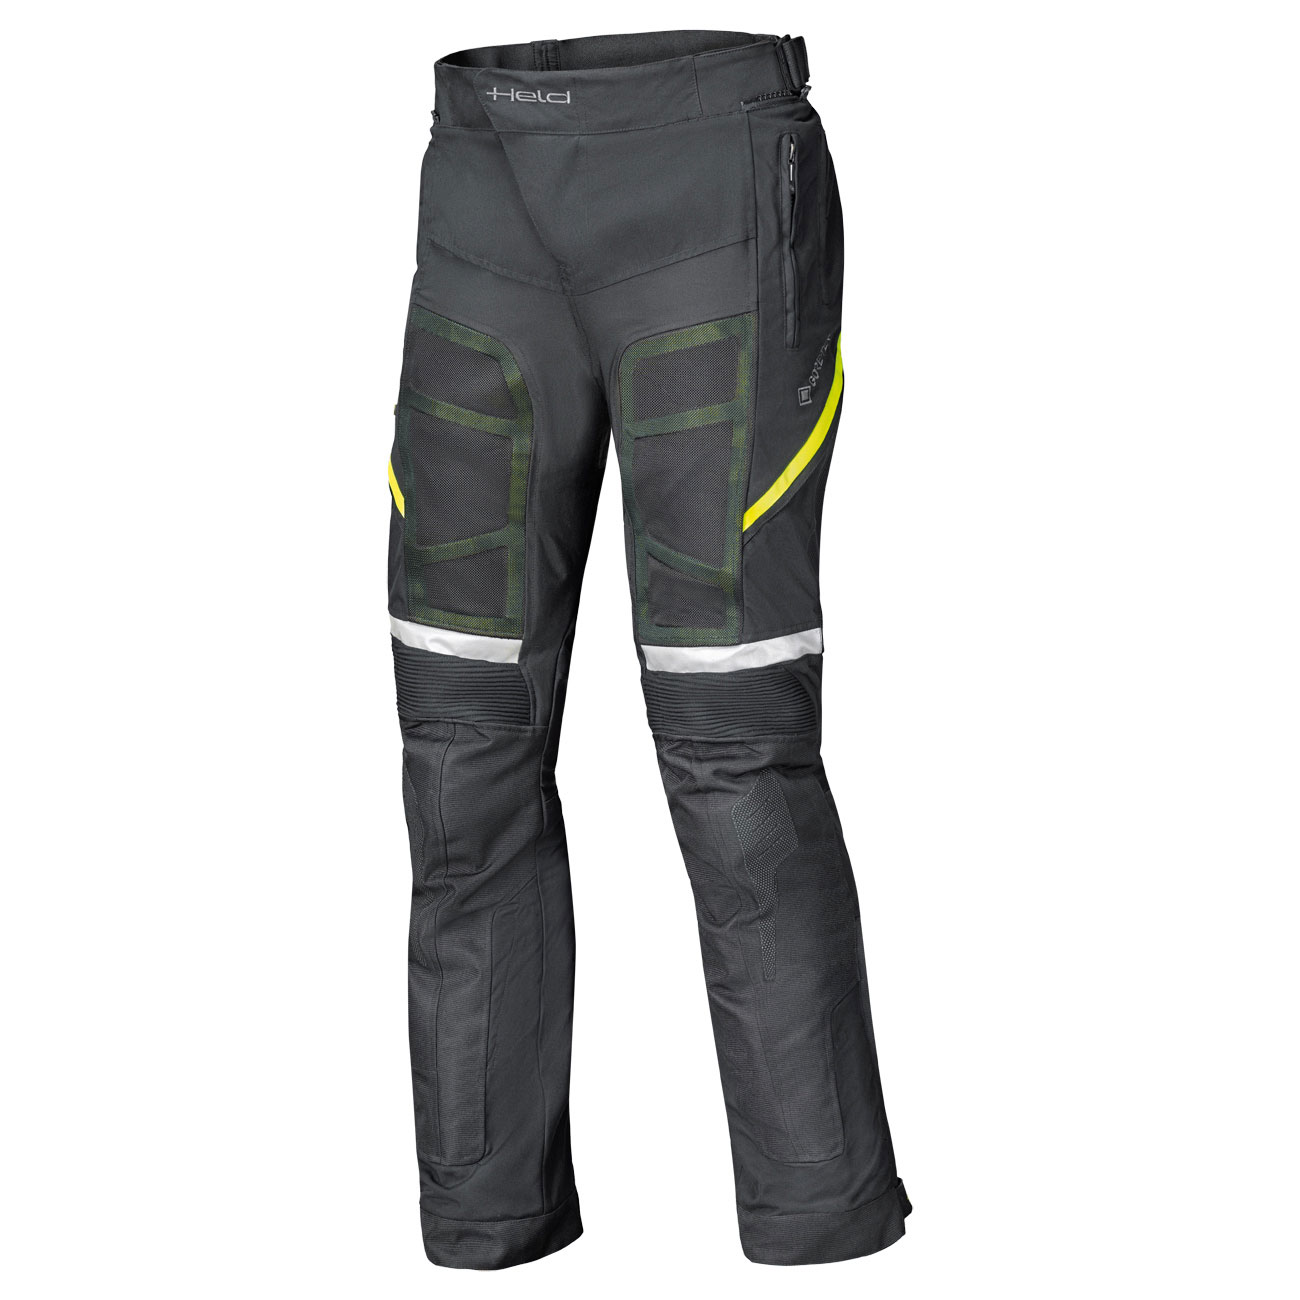 Pantaloni Held 2in1 AeroSec Gore-Tex® nero giallo